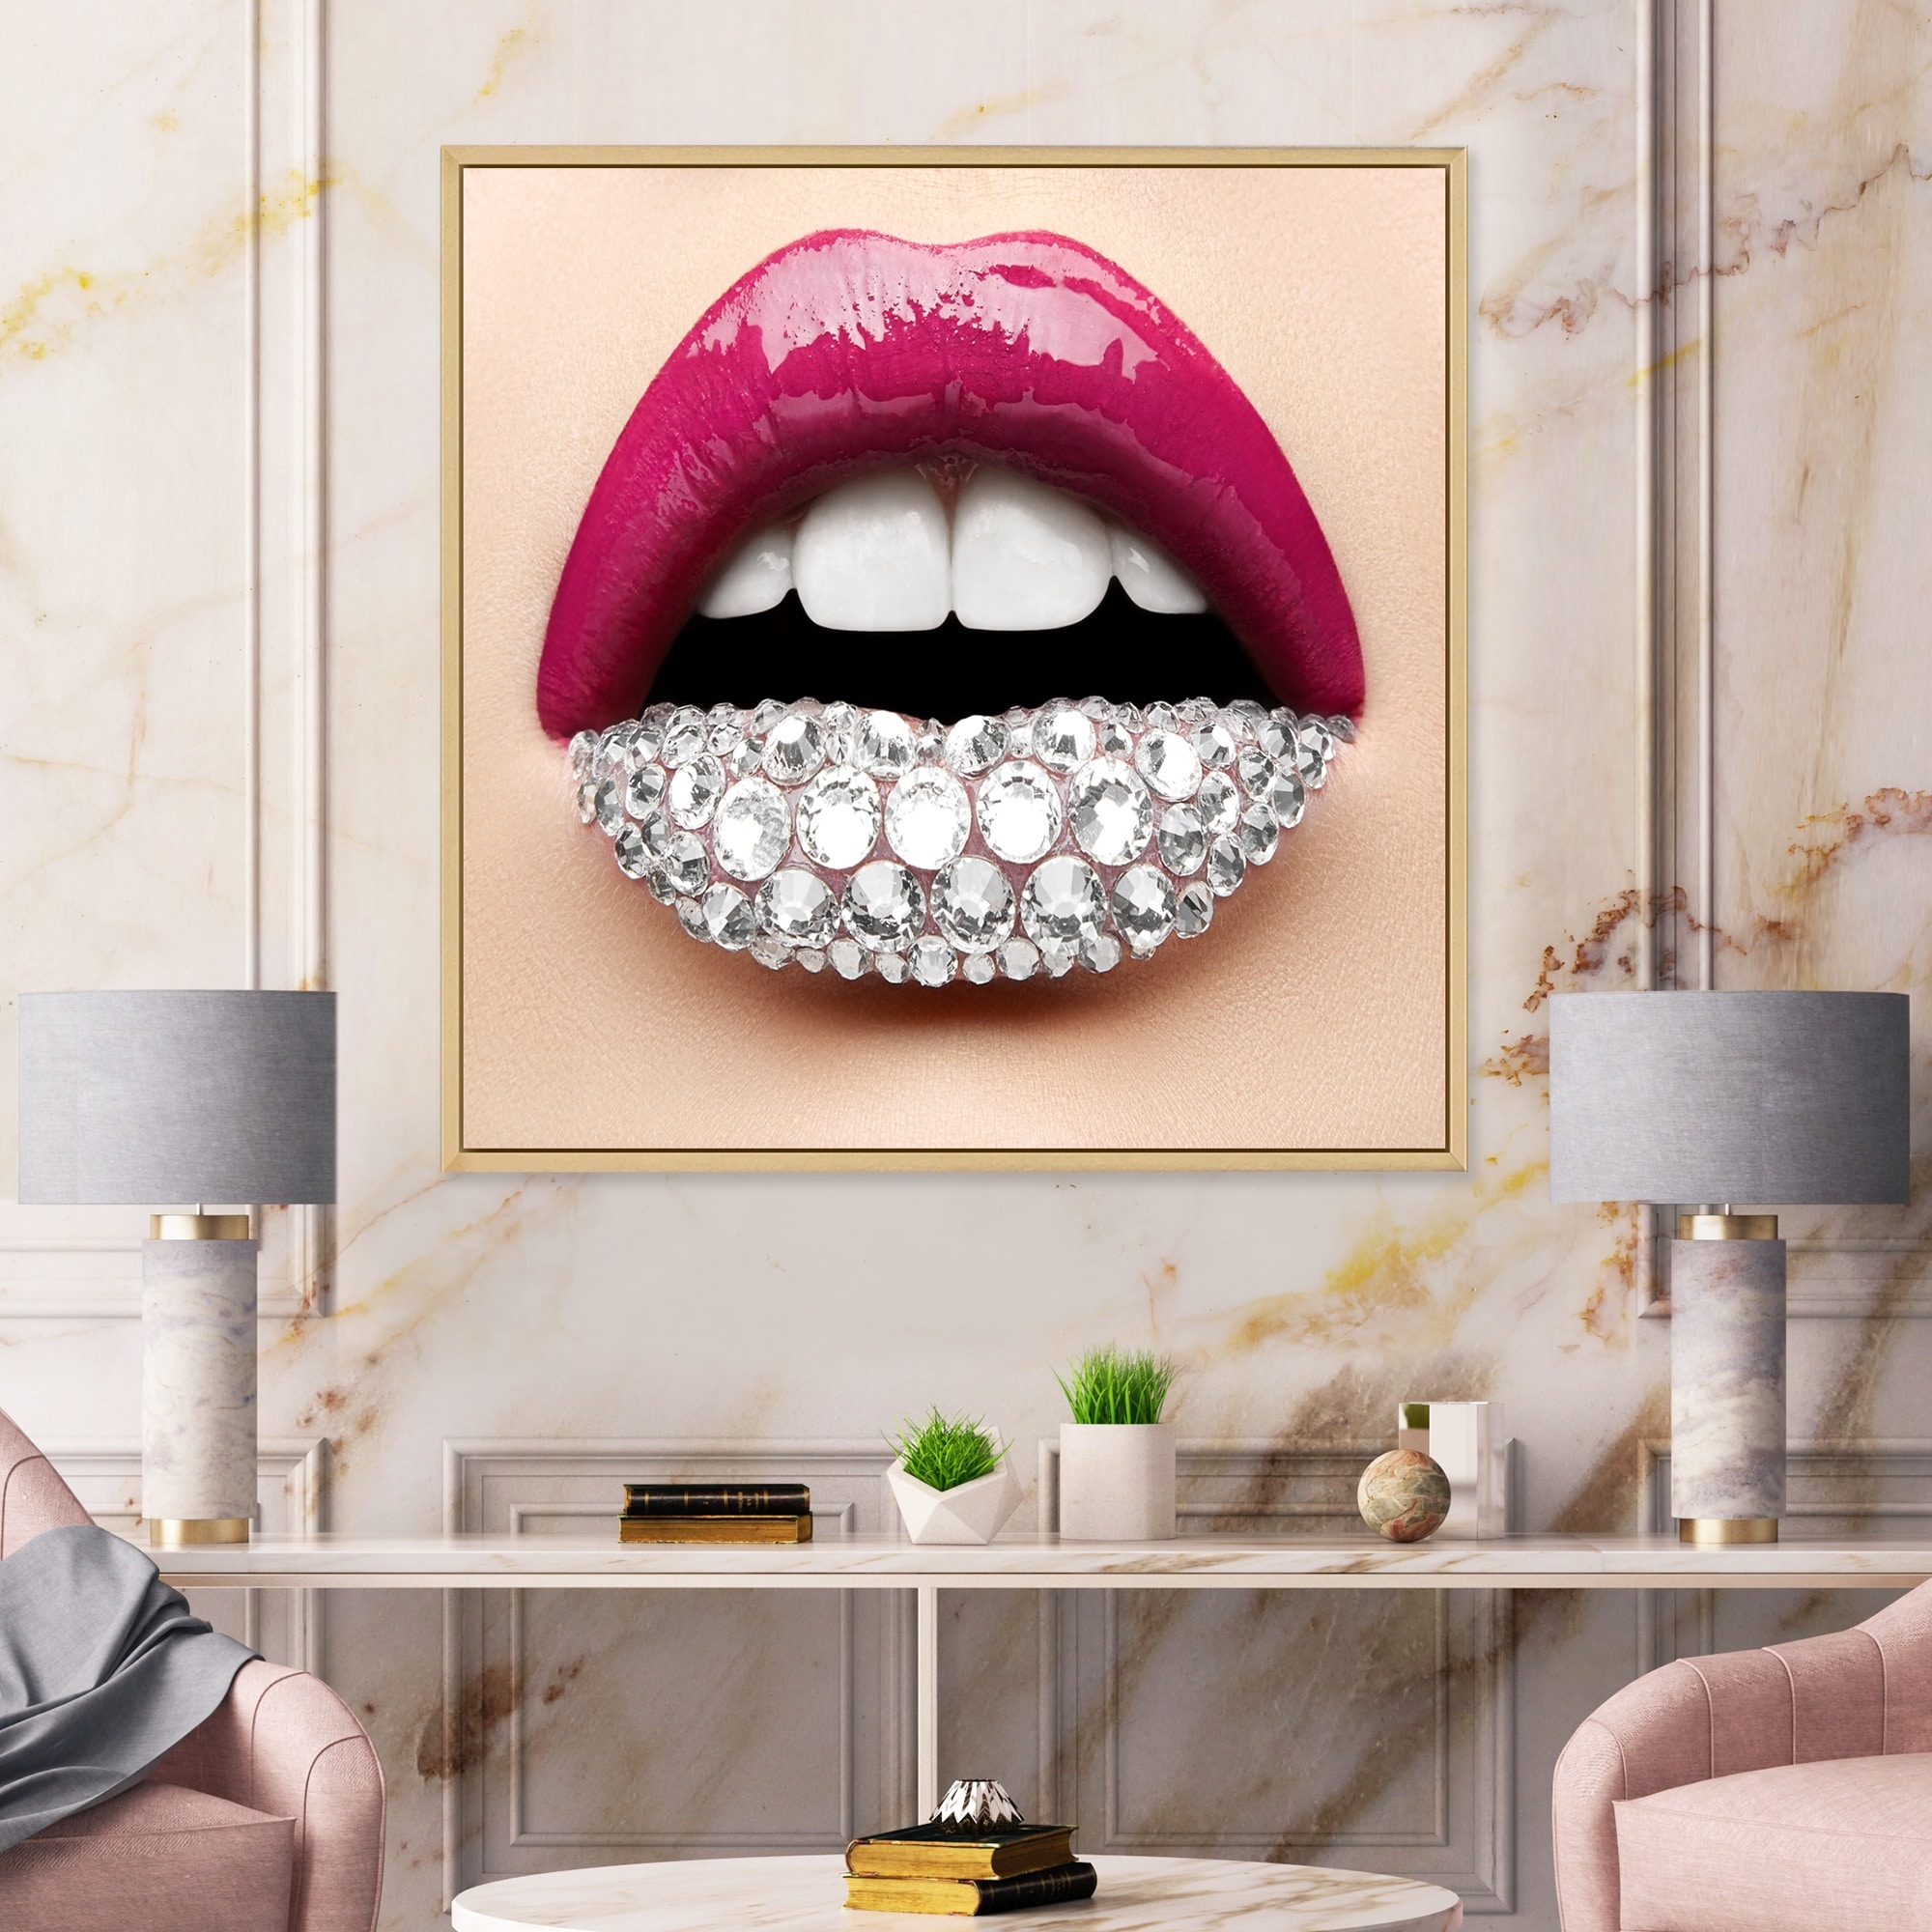 https://ak1.ostkcdn.com/images/products/is/images/direct/6313f6144c13e13c2457d205b91b8ccb55013a05/Designart-%27Woman-Lips-With-Pink-Lipstick-White-Diamonds%27-Modern-Framed-Canvas-Wall-Art-Print.jpg